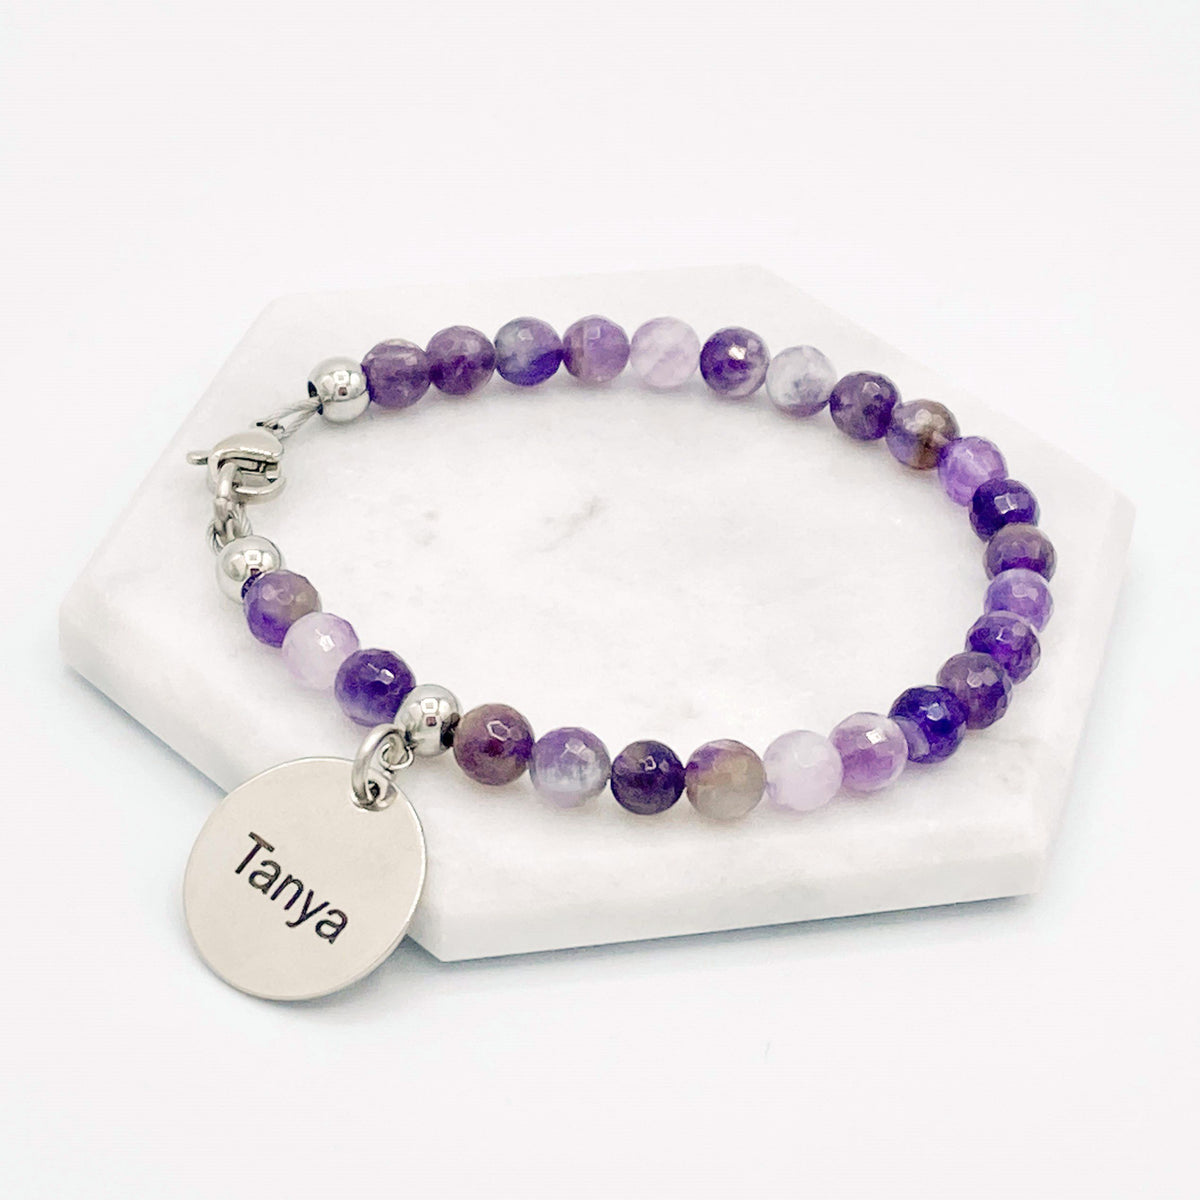 personalised amethyst bracelet anniversary gift purple